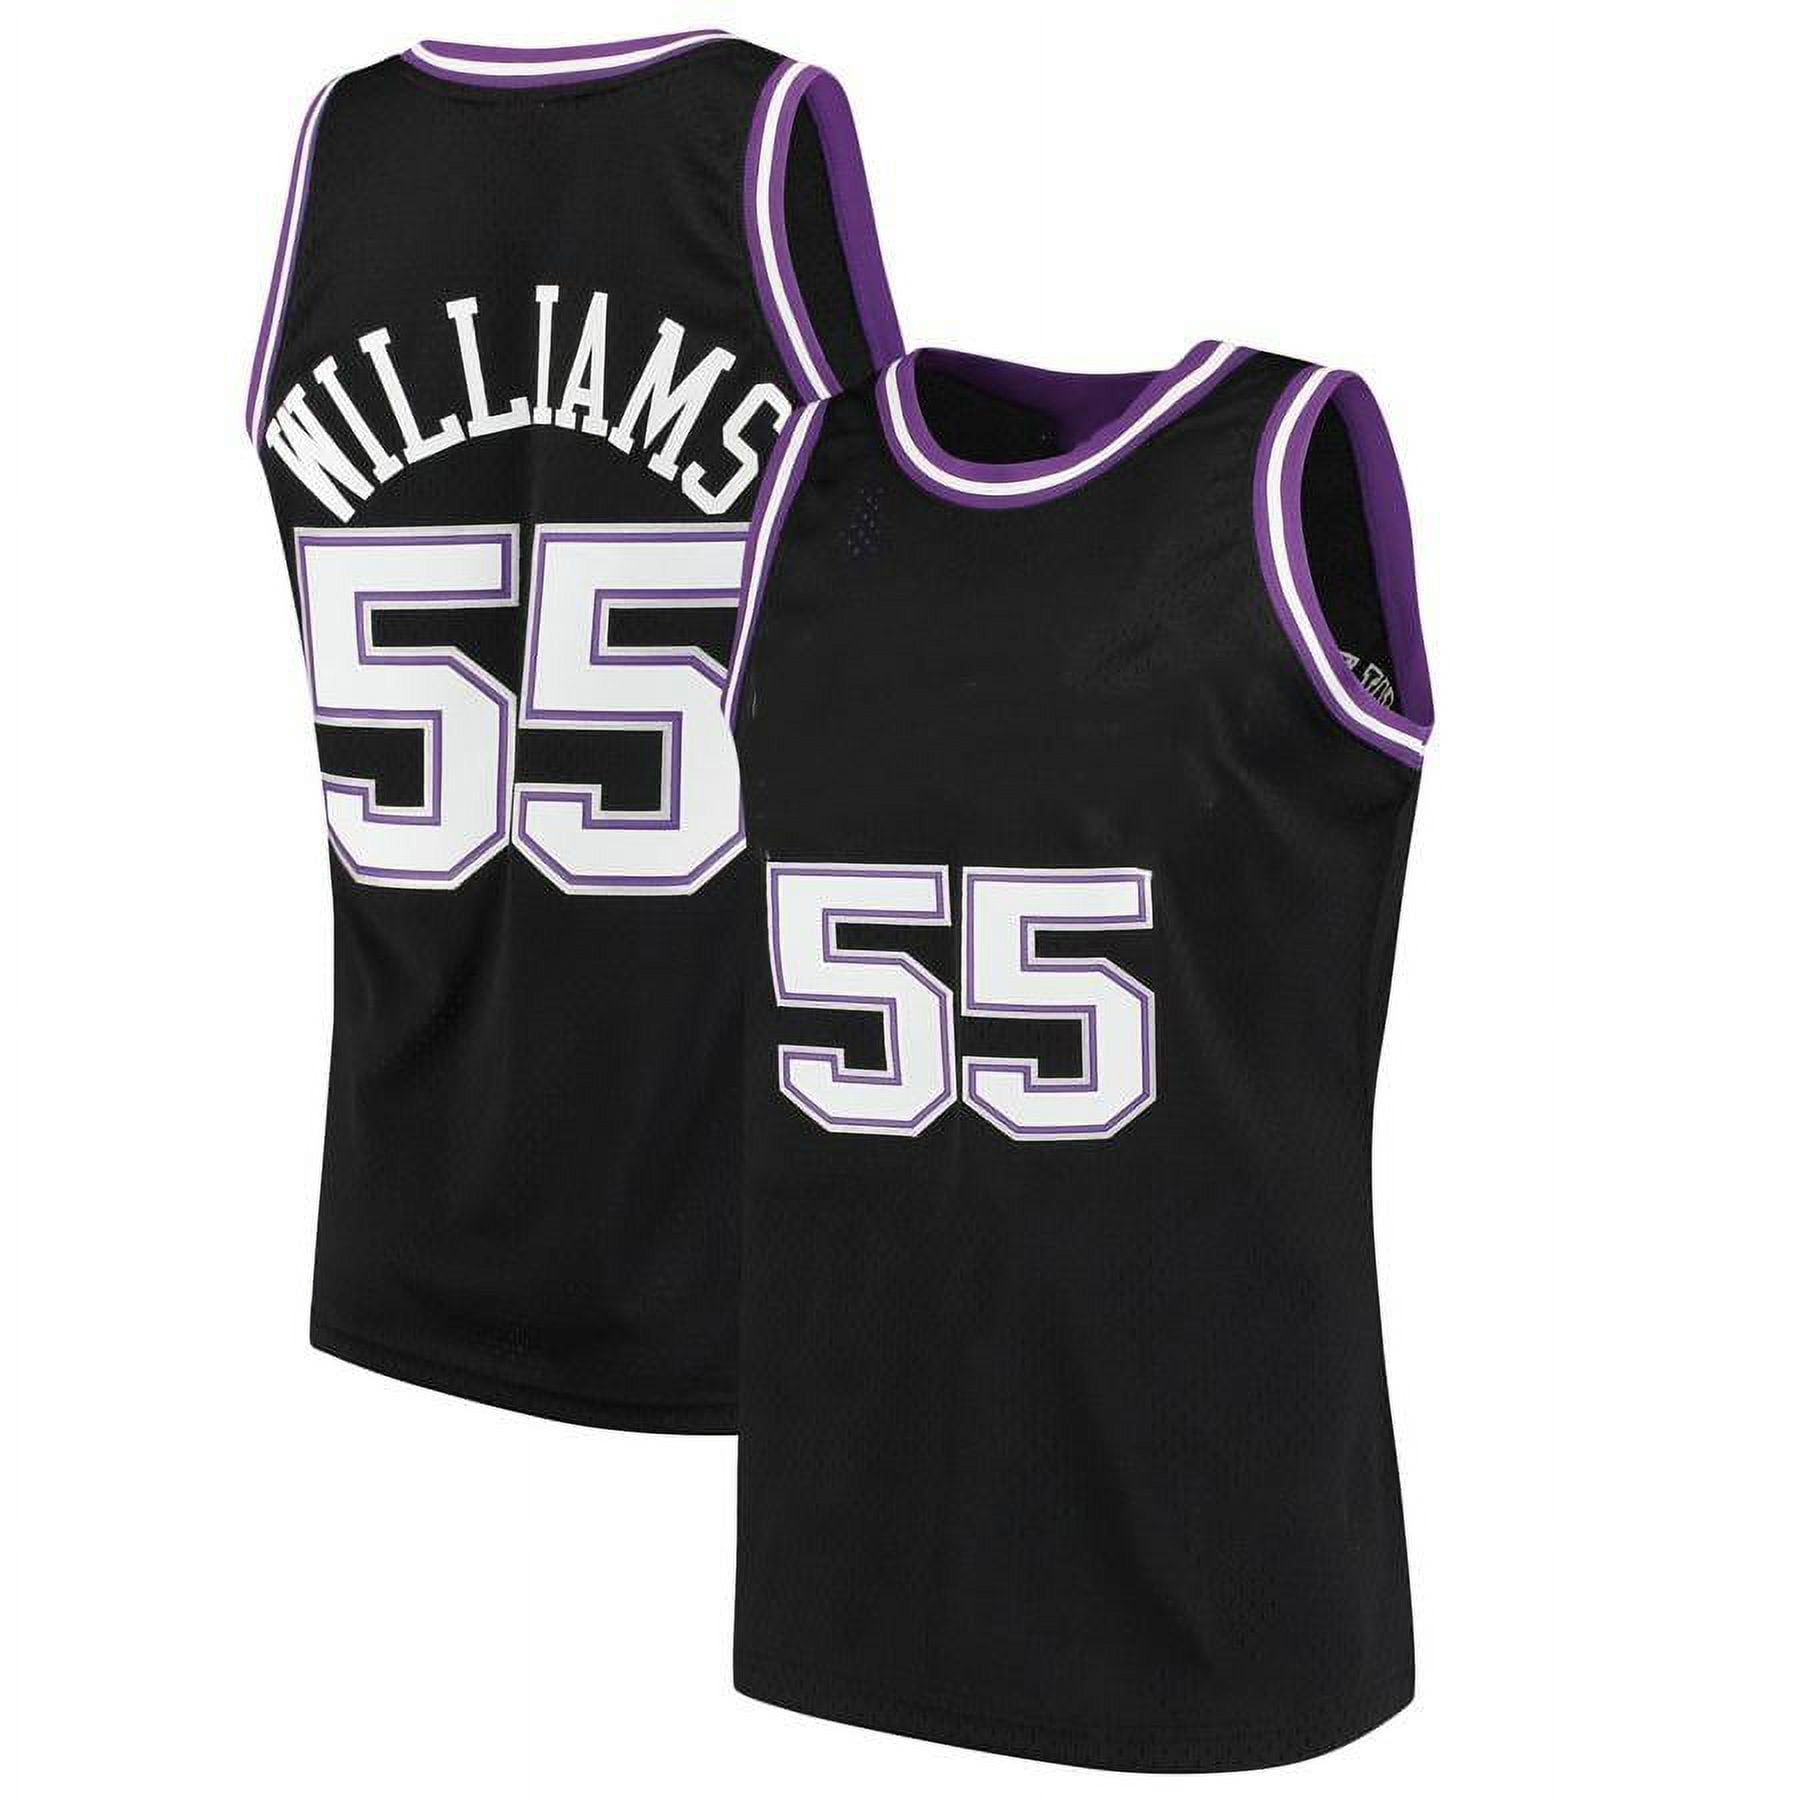 Jason Williams NBA Jerseys, NBA Jersey, NBA Uniforms